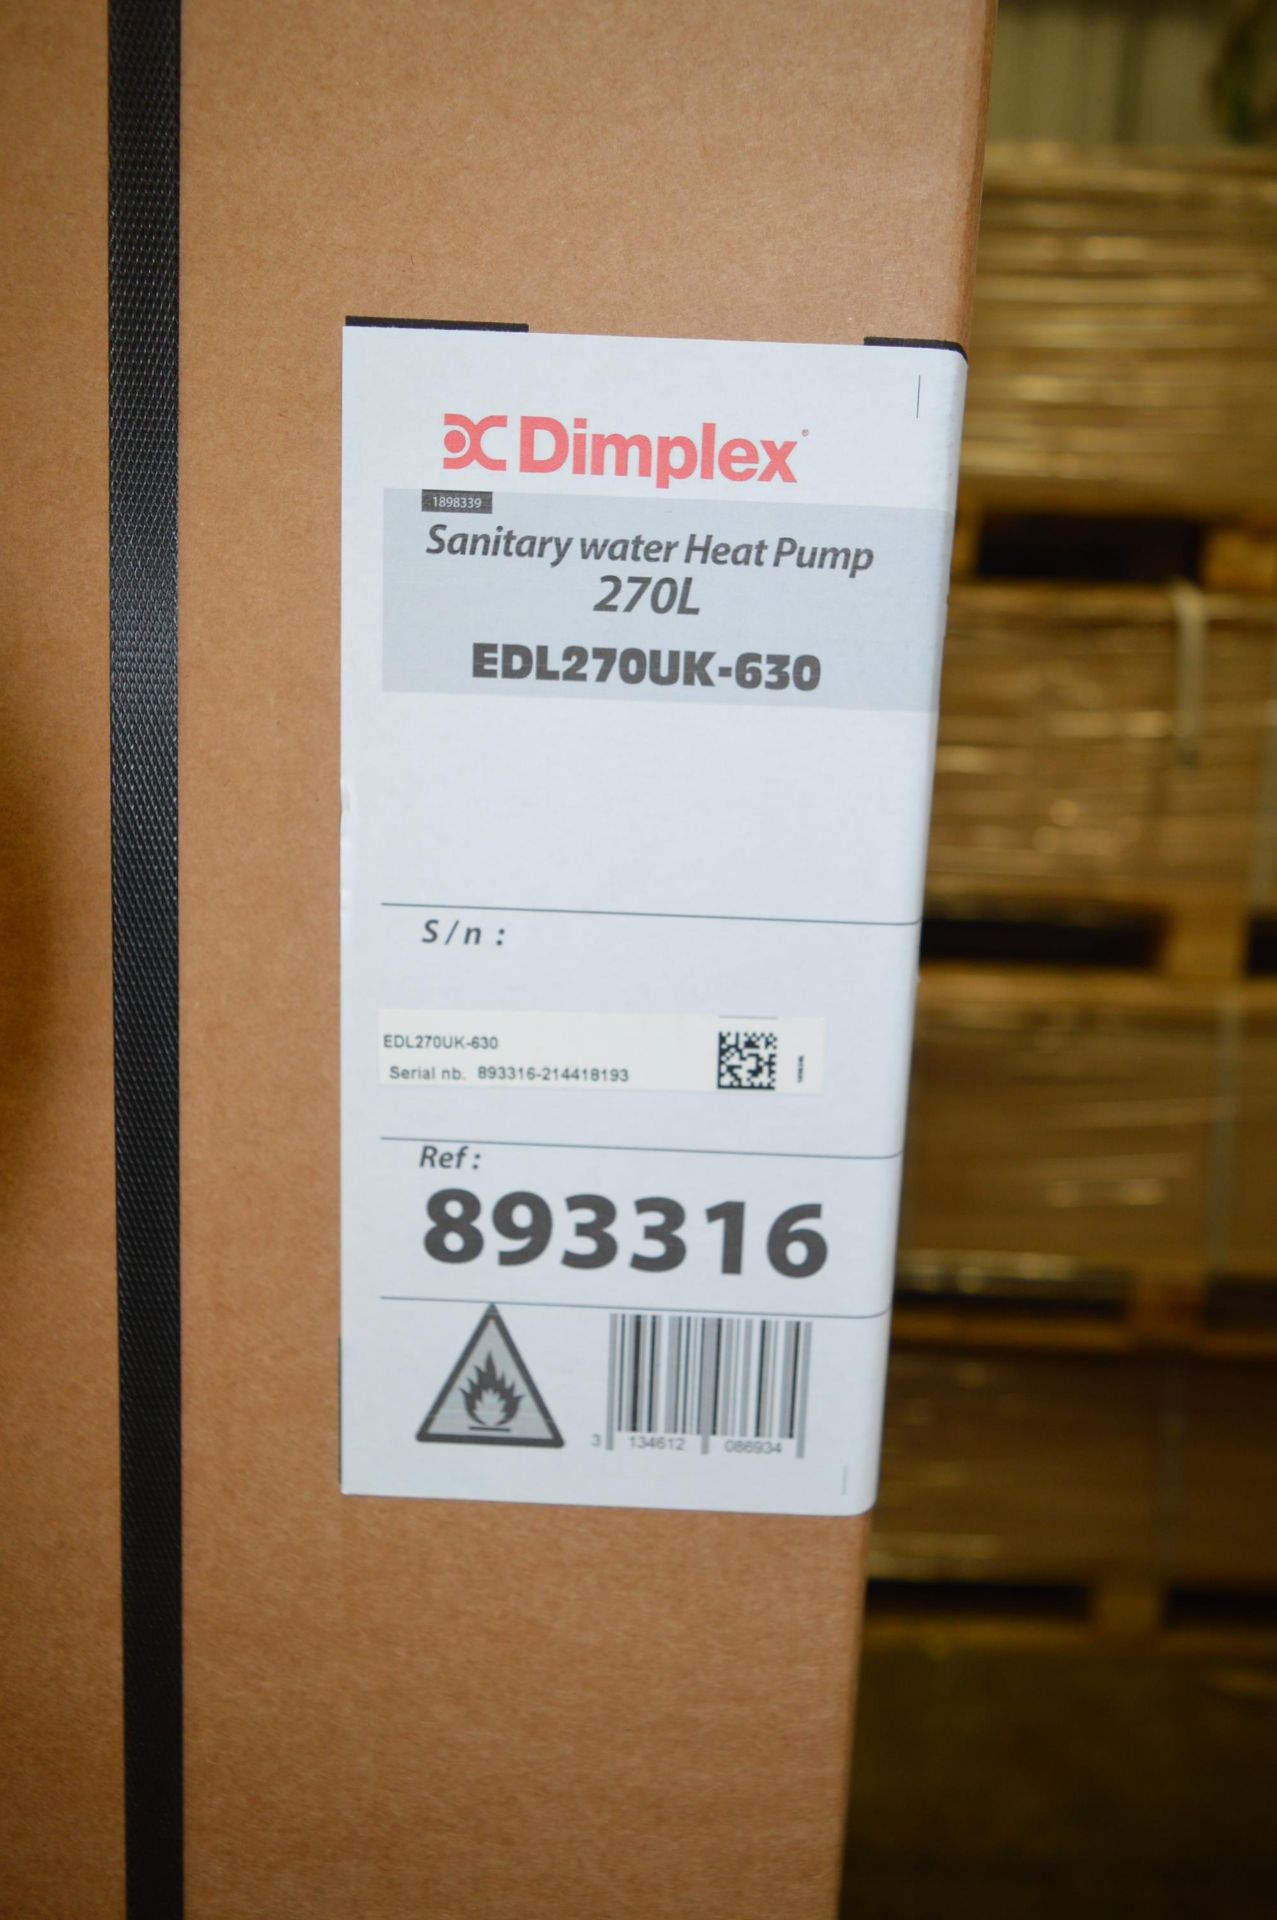 Dimplex, sanitary water heat pump, 270L, Model EDL270UK-630, Serial No. 893316-214418193 (packaged) - Image 2 of 2